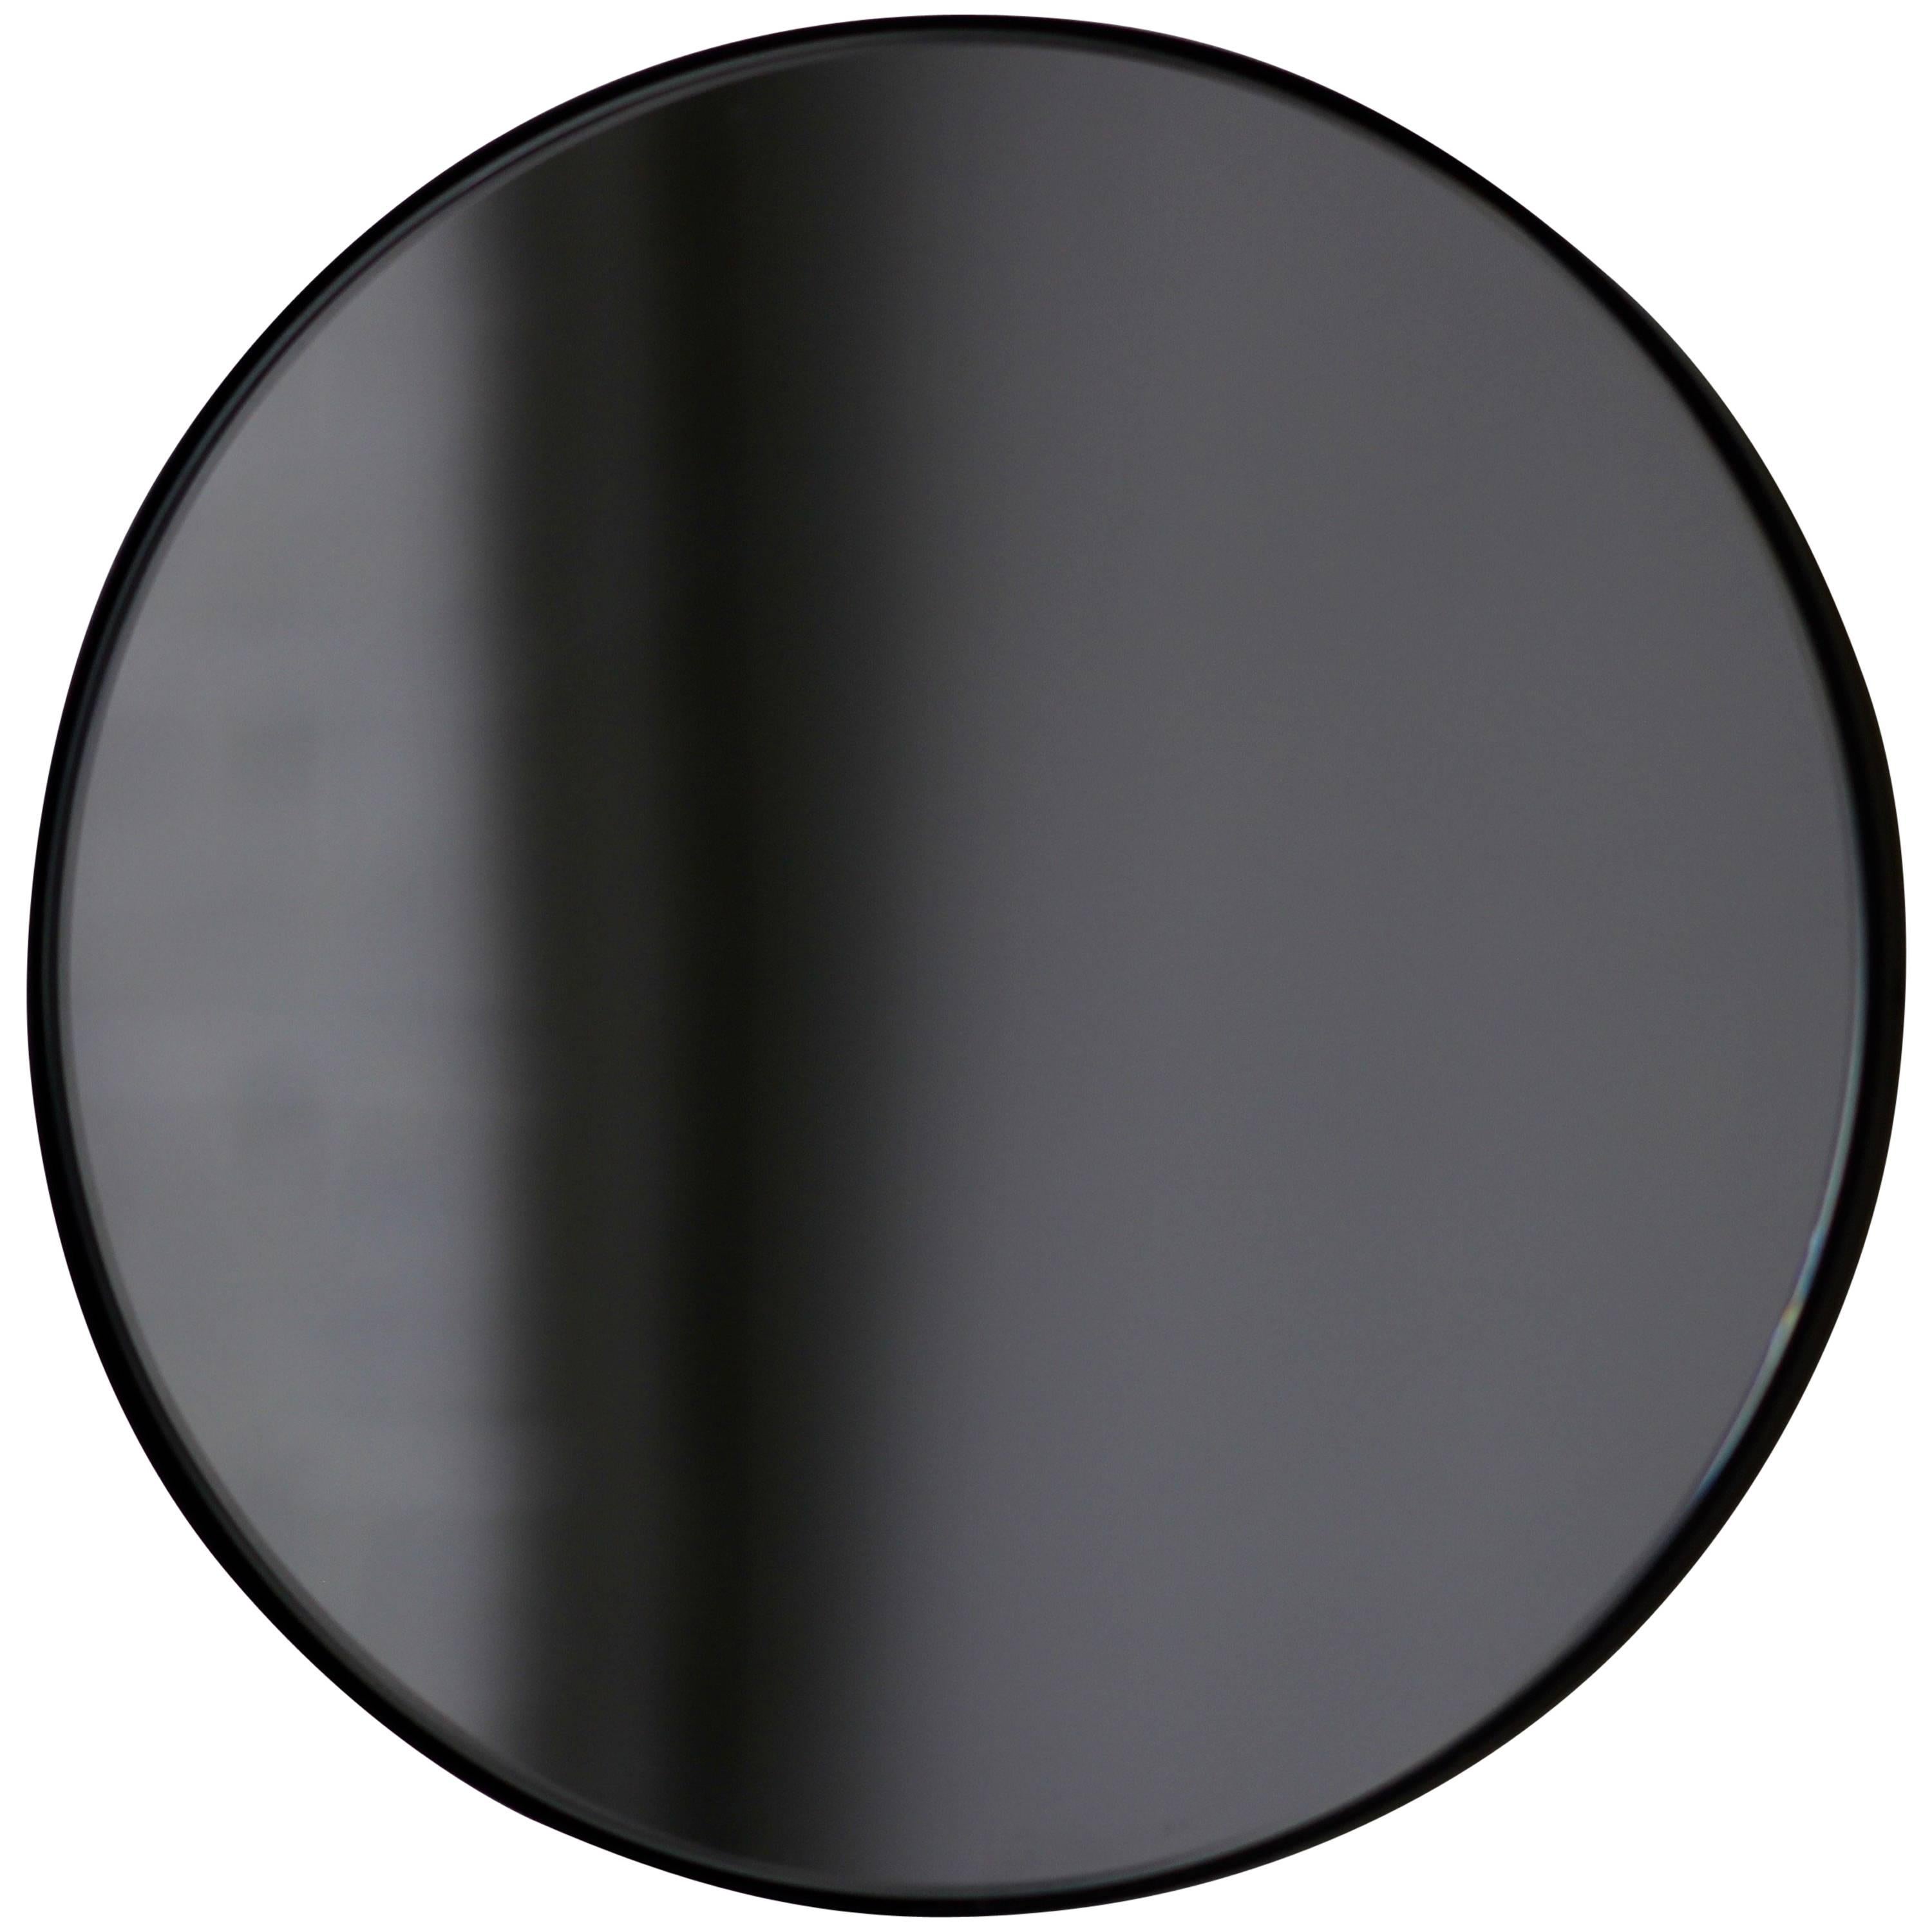 Orbis Black Tinted Round Minimalist Mirror with Black Frame, Customisable, Small